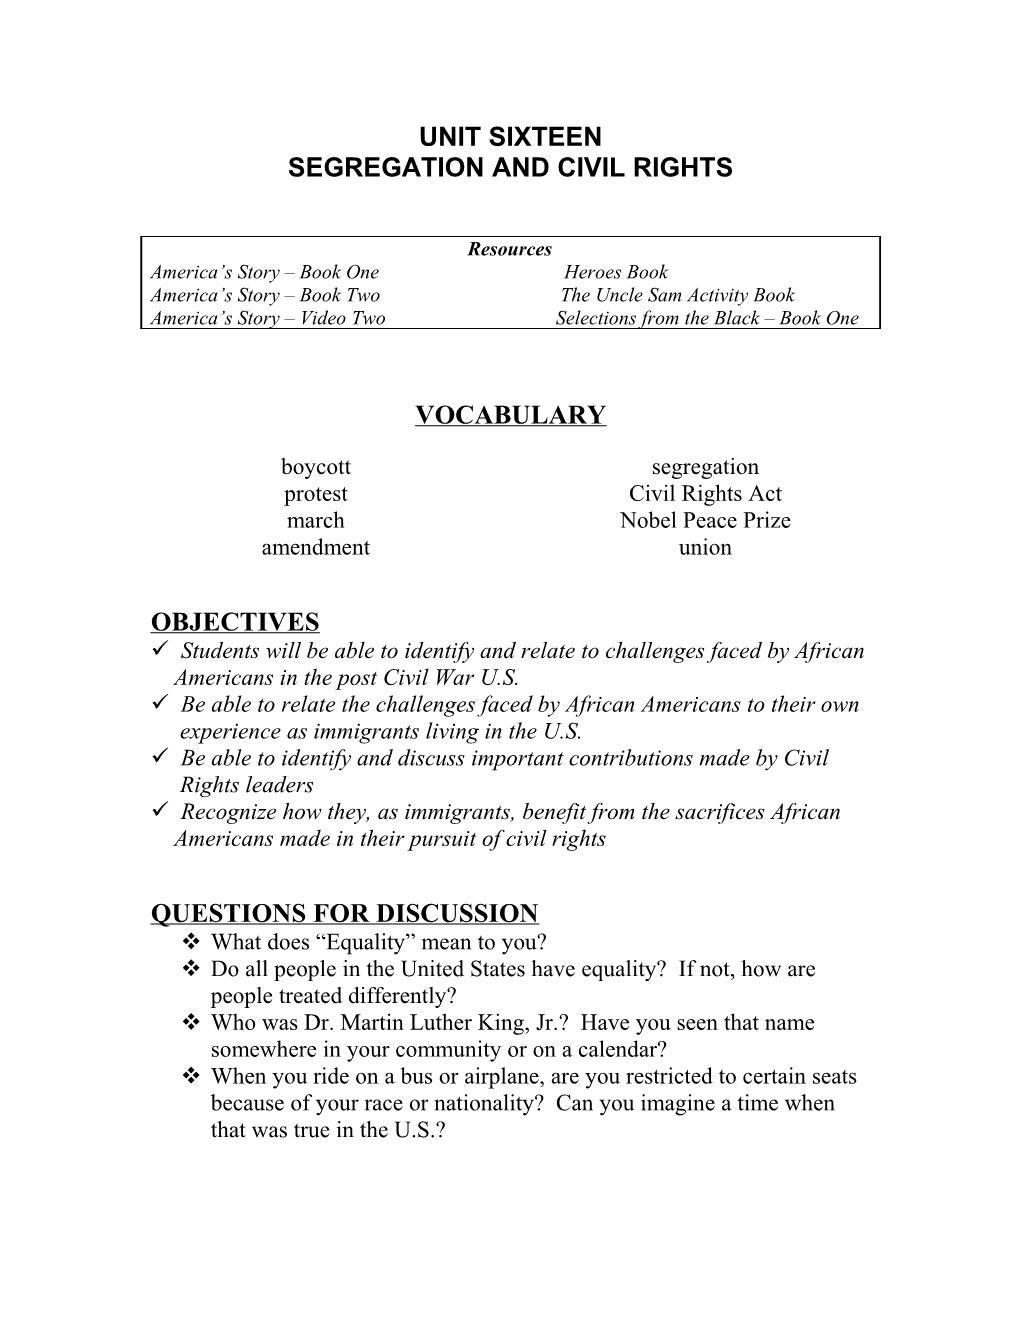 Segregation and Civil Rights